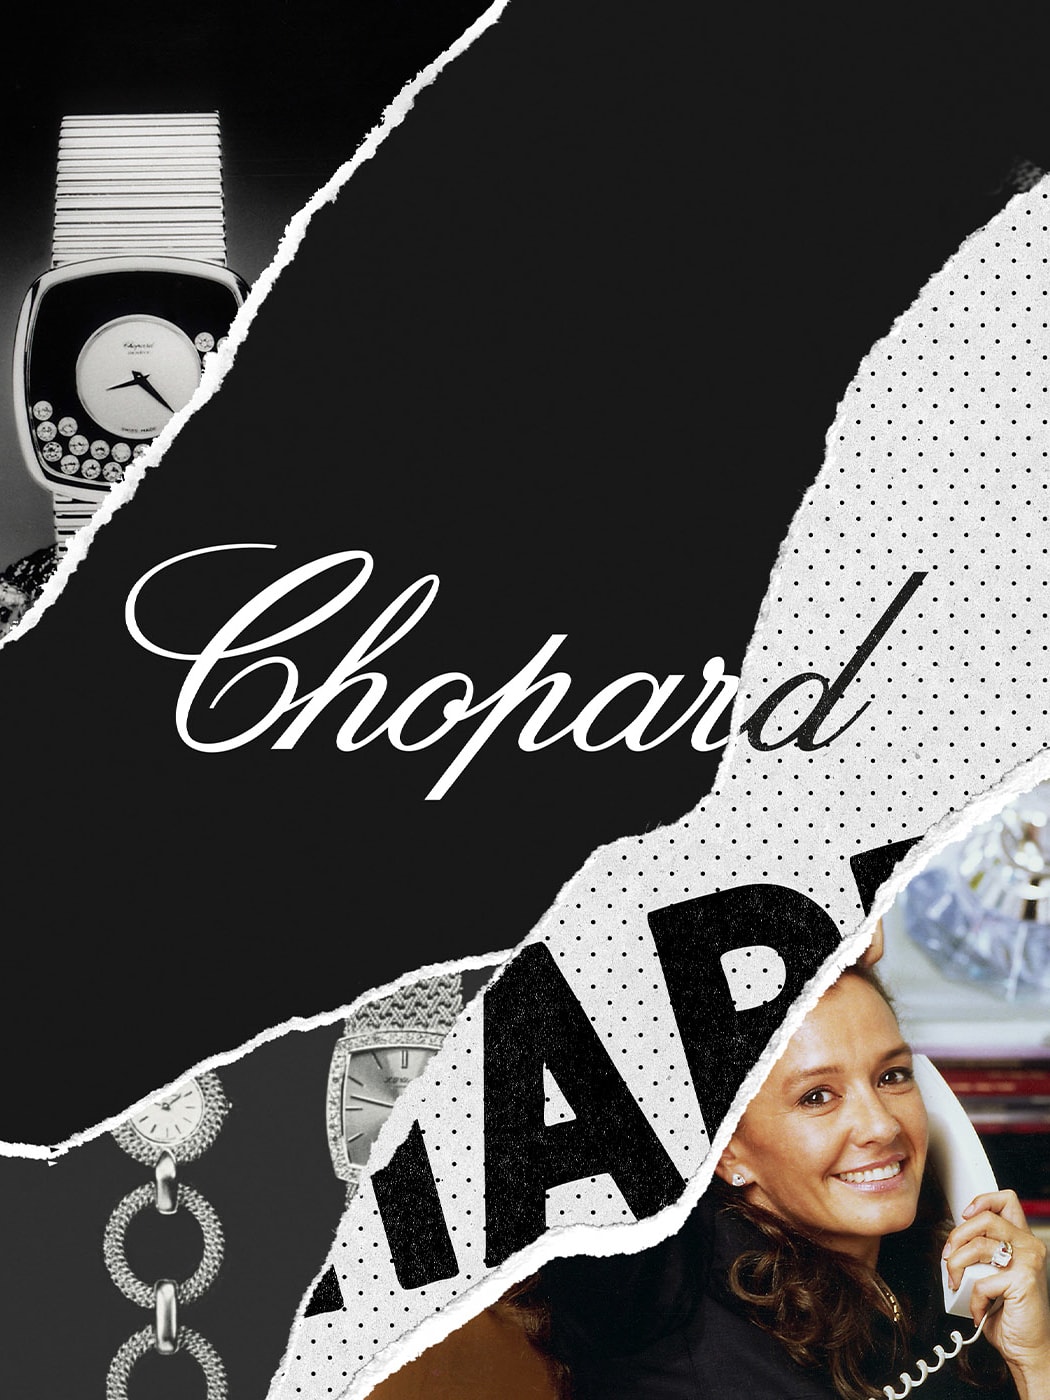 Chopard graphic design. 